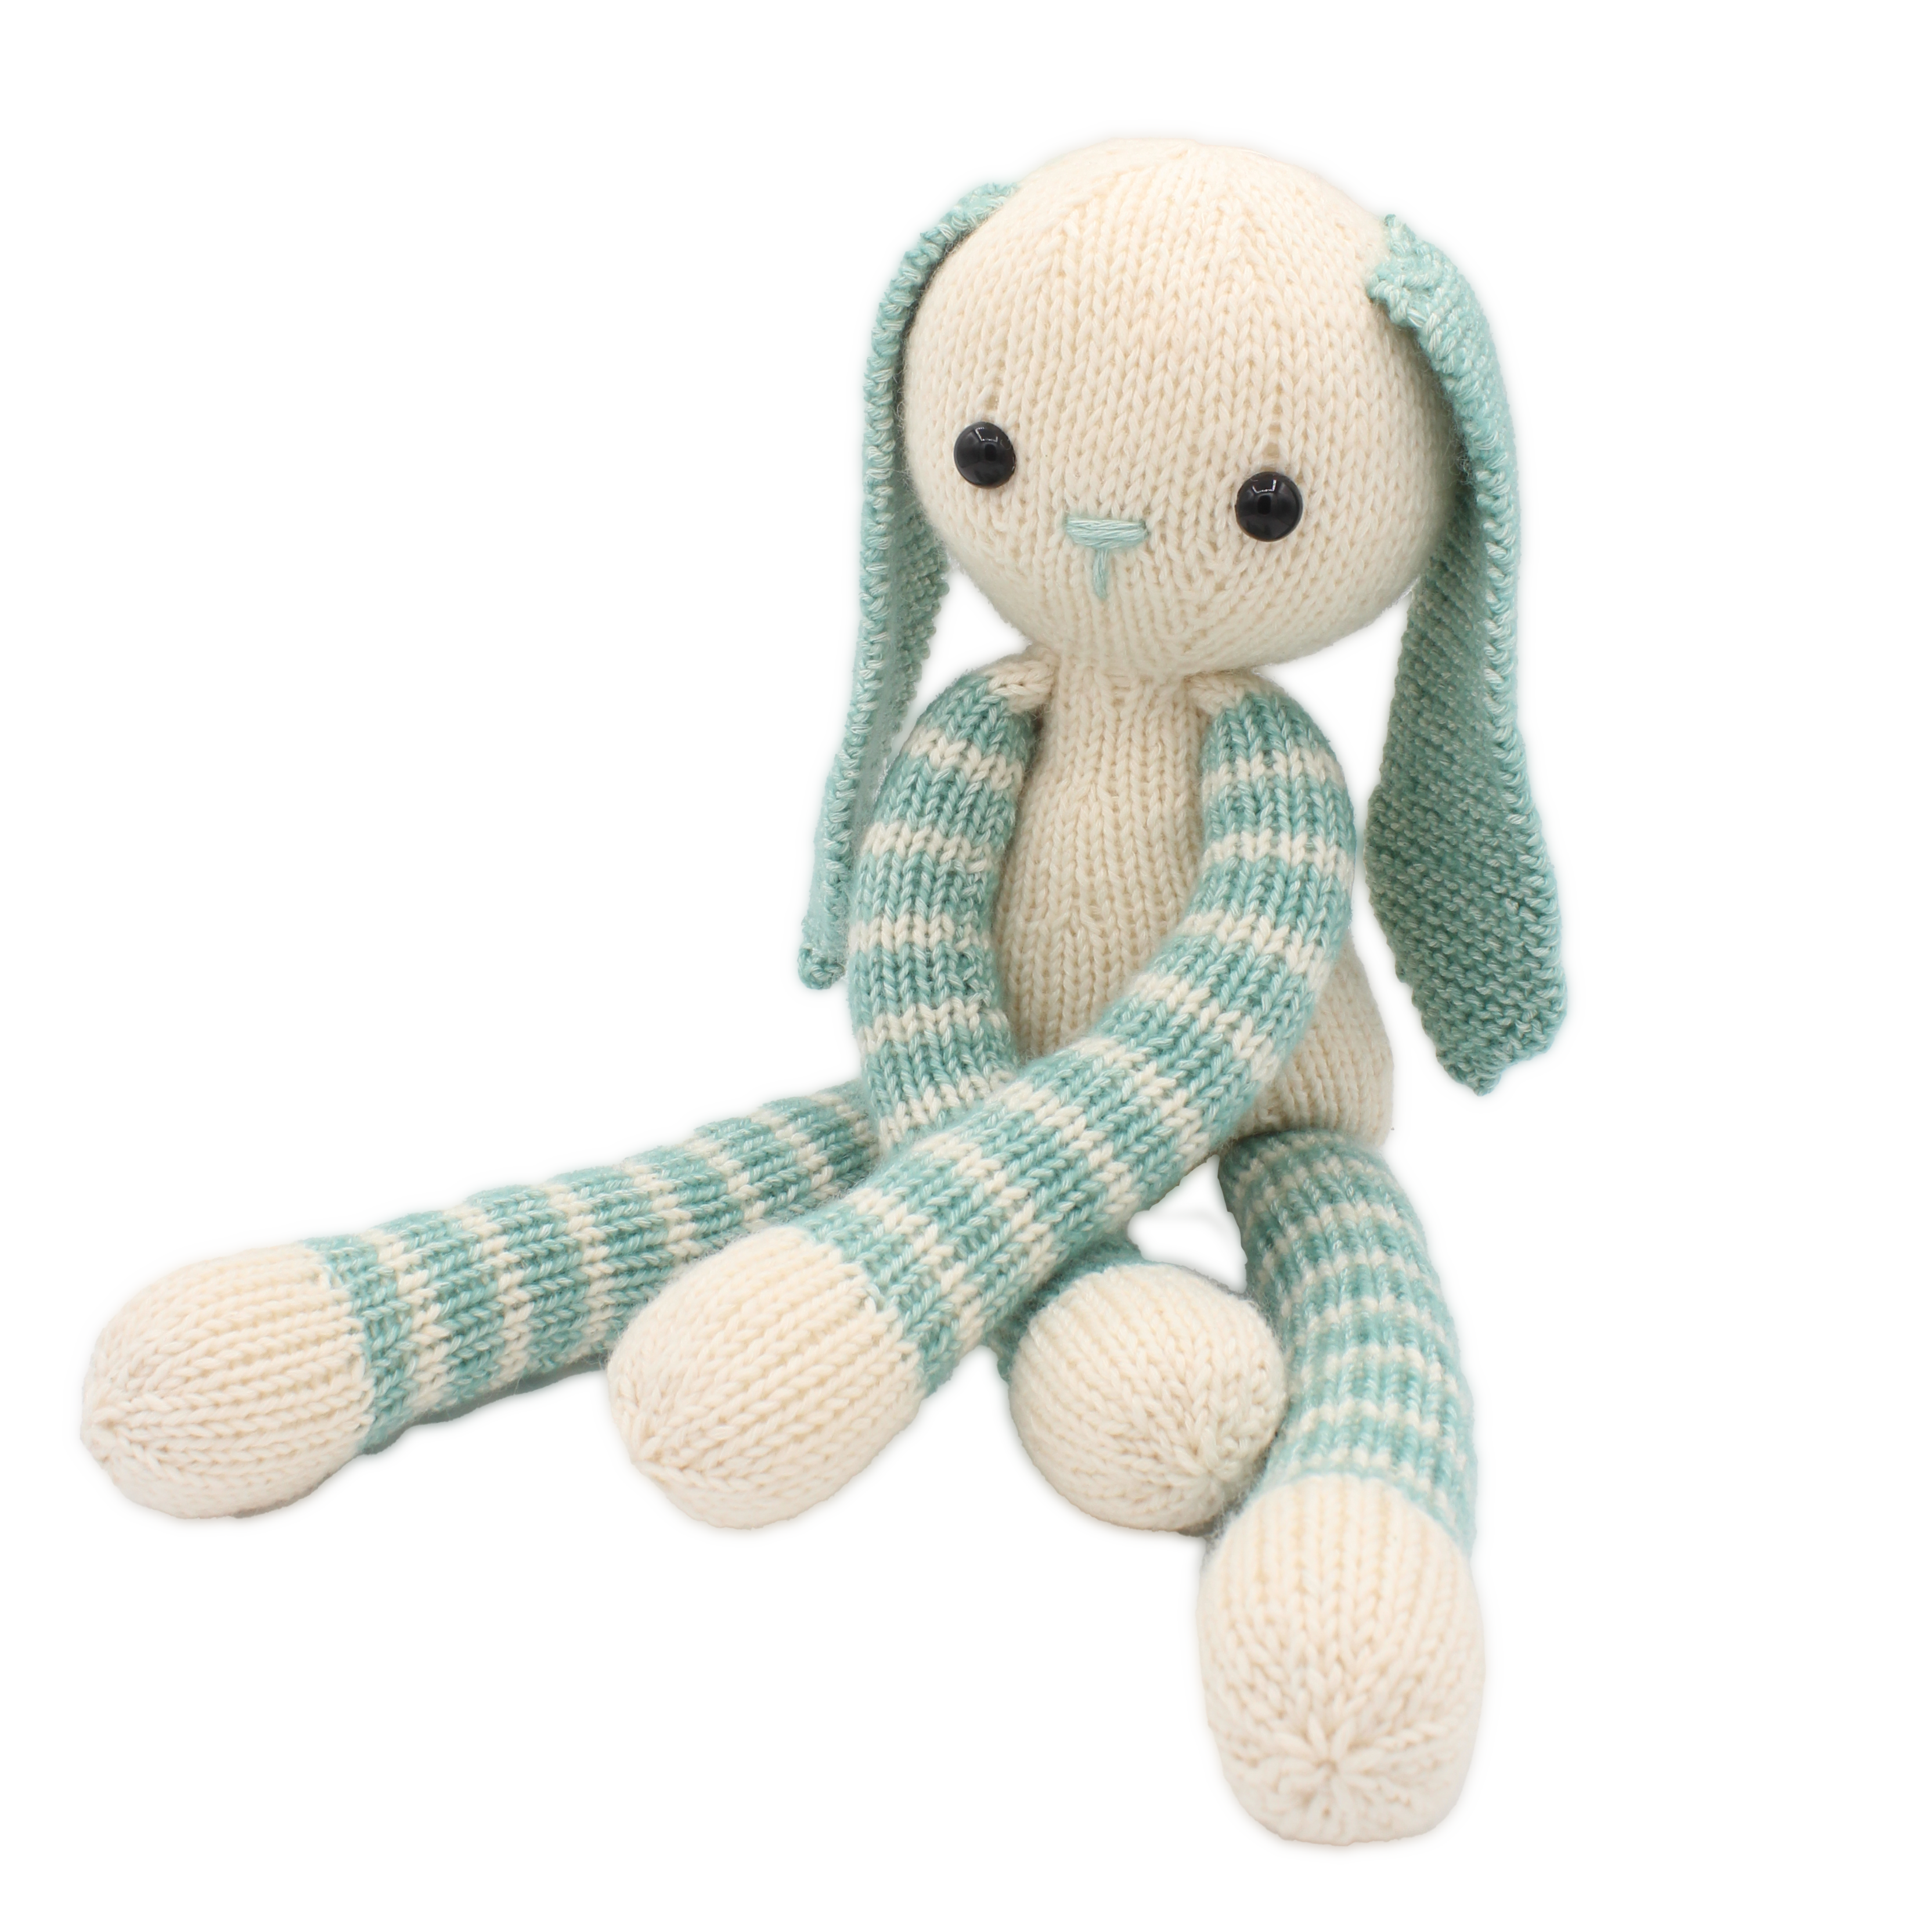 Hardicraft - Shelly Rabbit - Knitting Kit